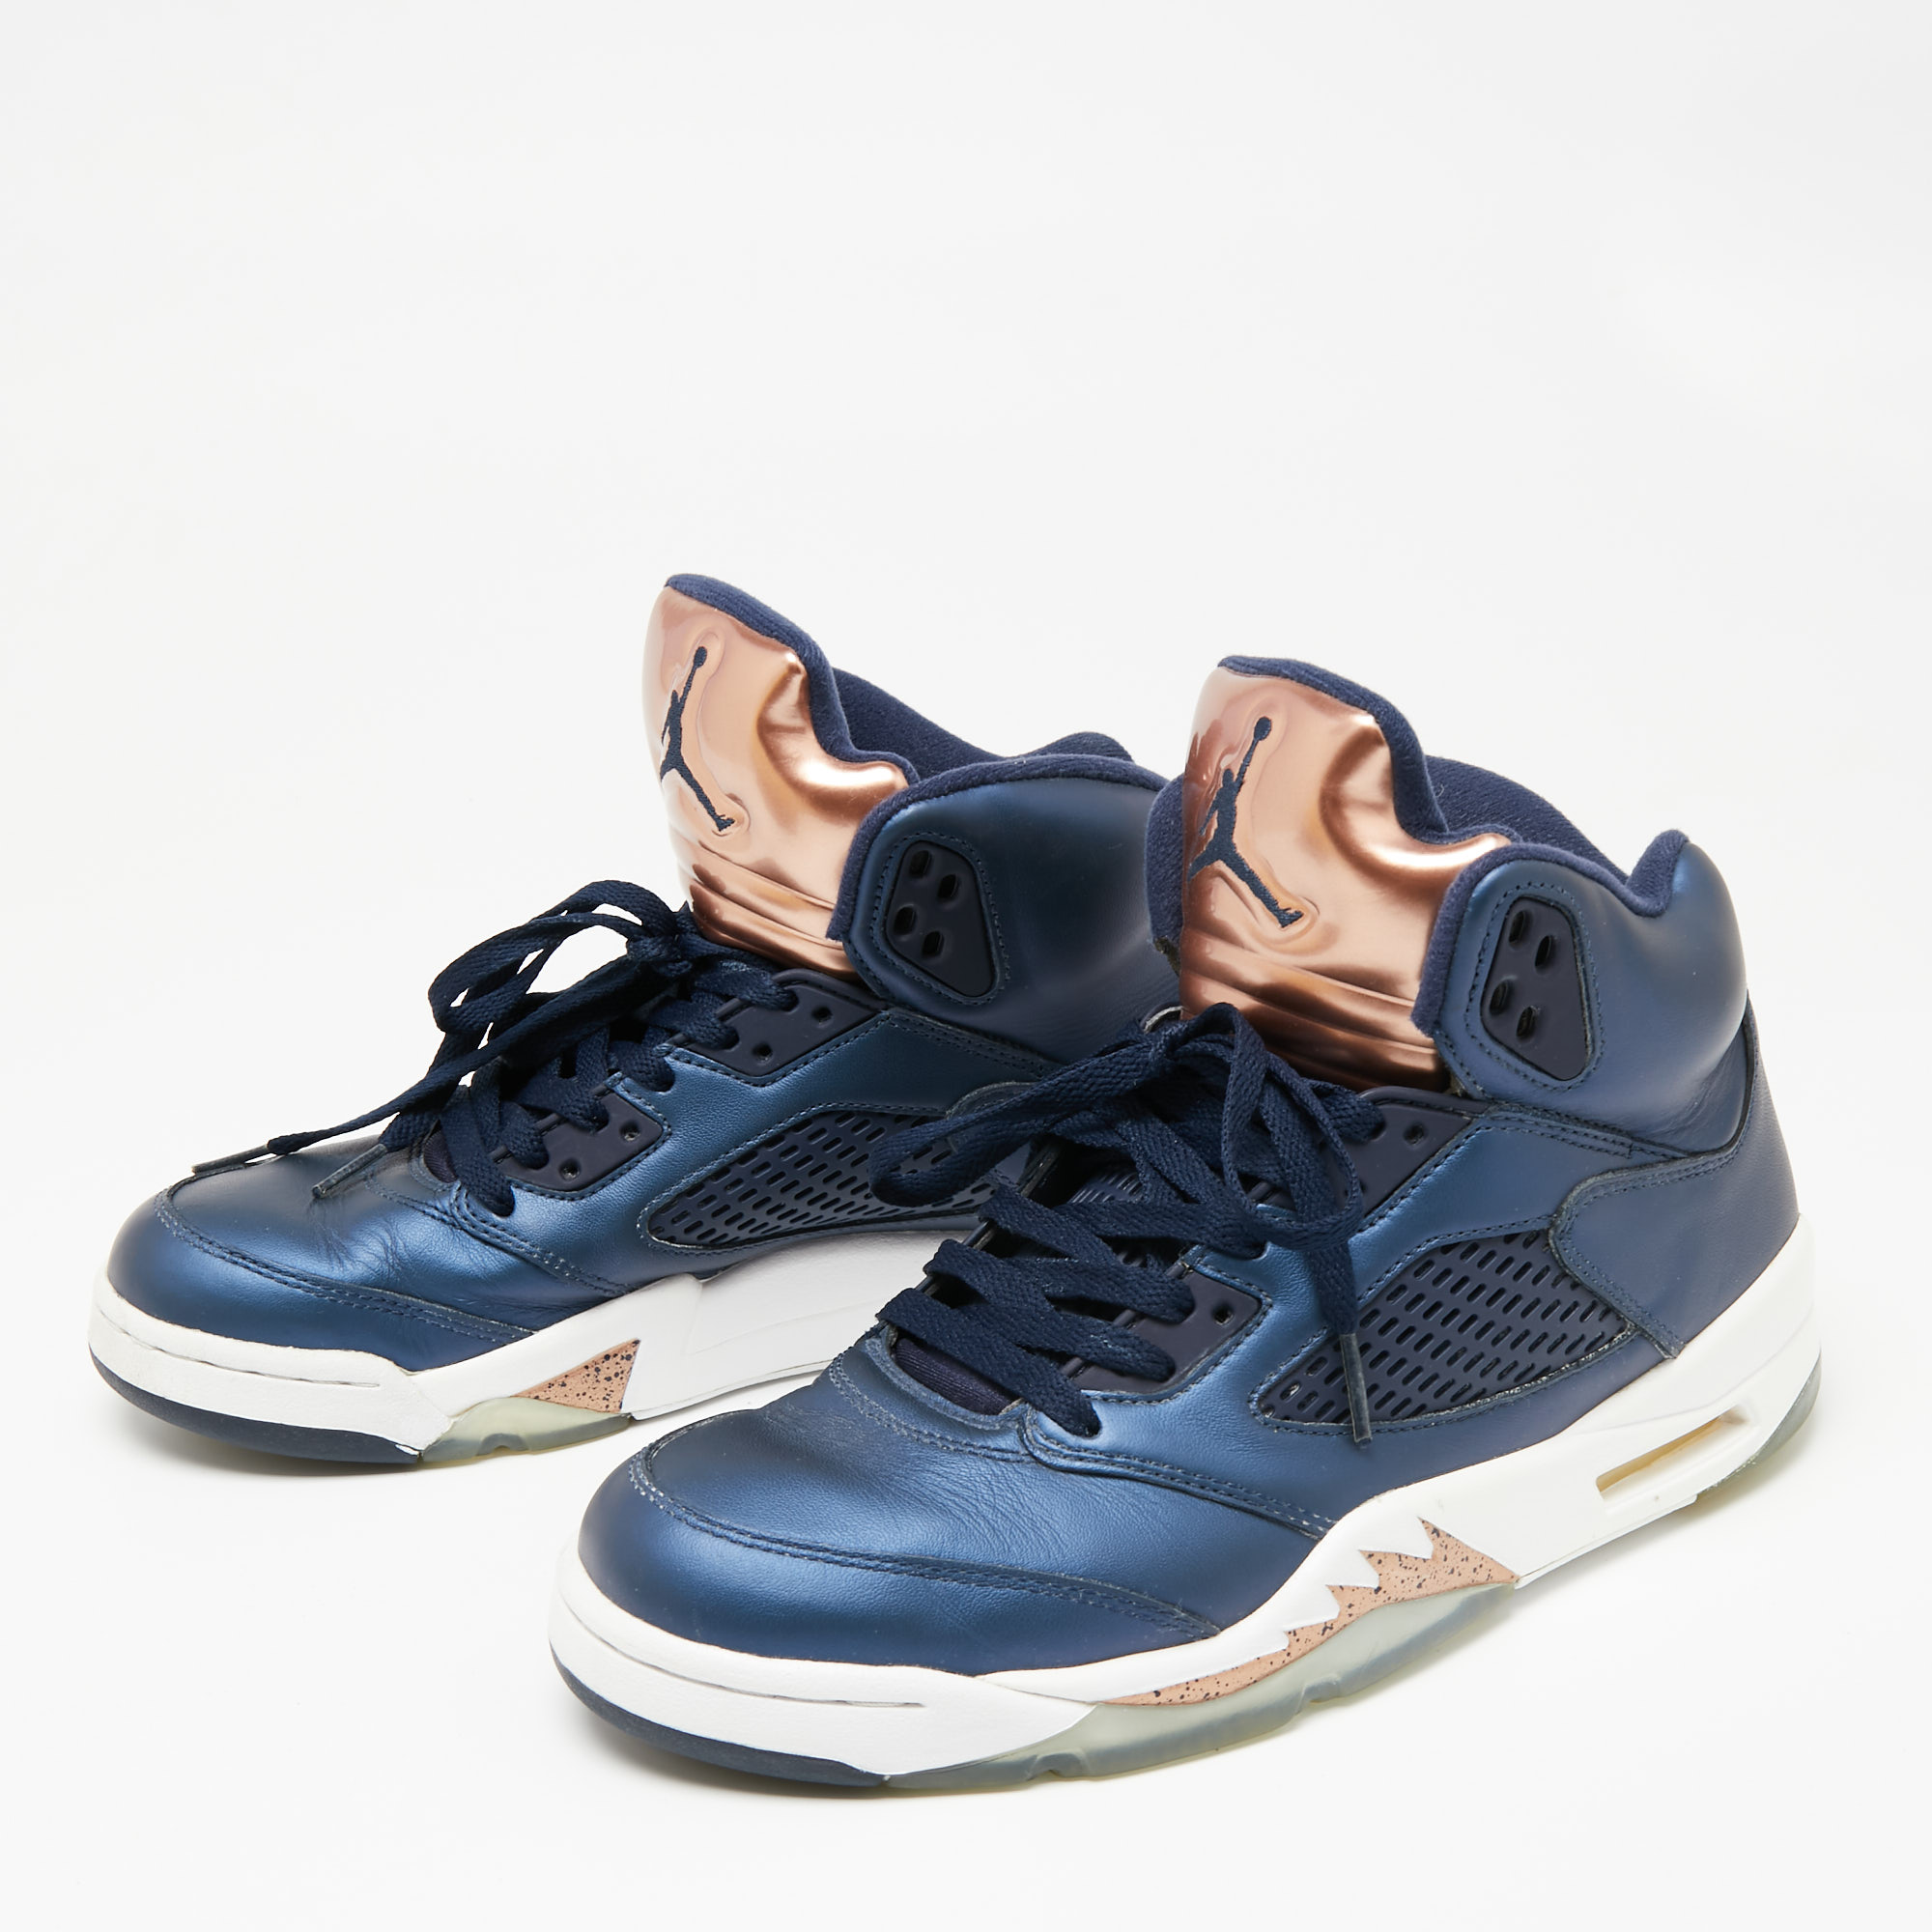 

Air Jordan Metallic Blue/Bronze Leather Retro 5 High Top Sneakers Size